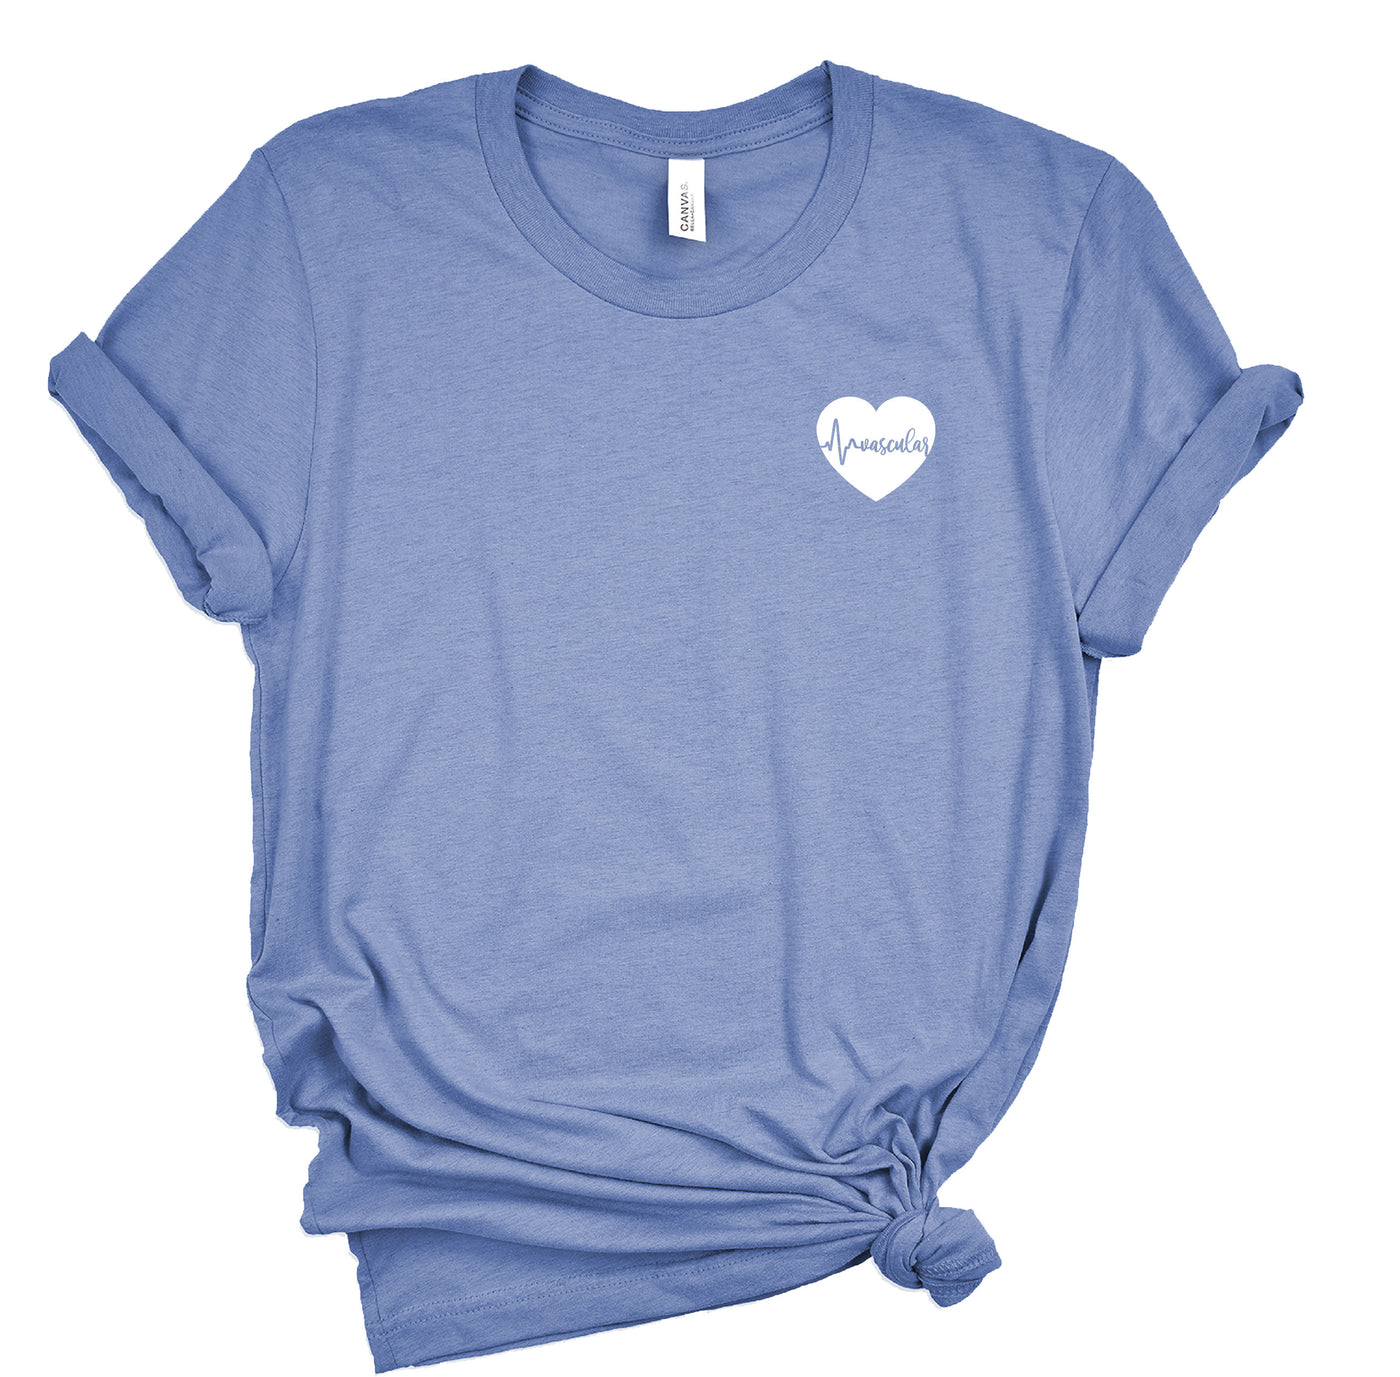 Vascular ECG Heart - Shirt